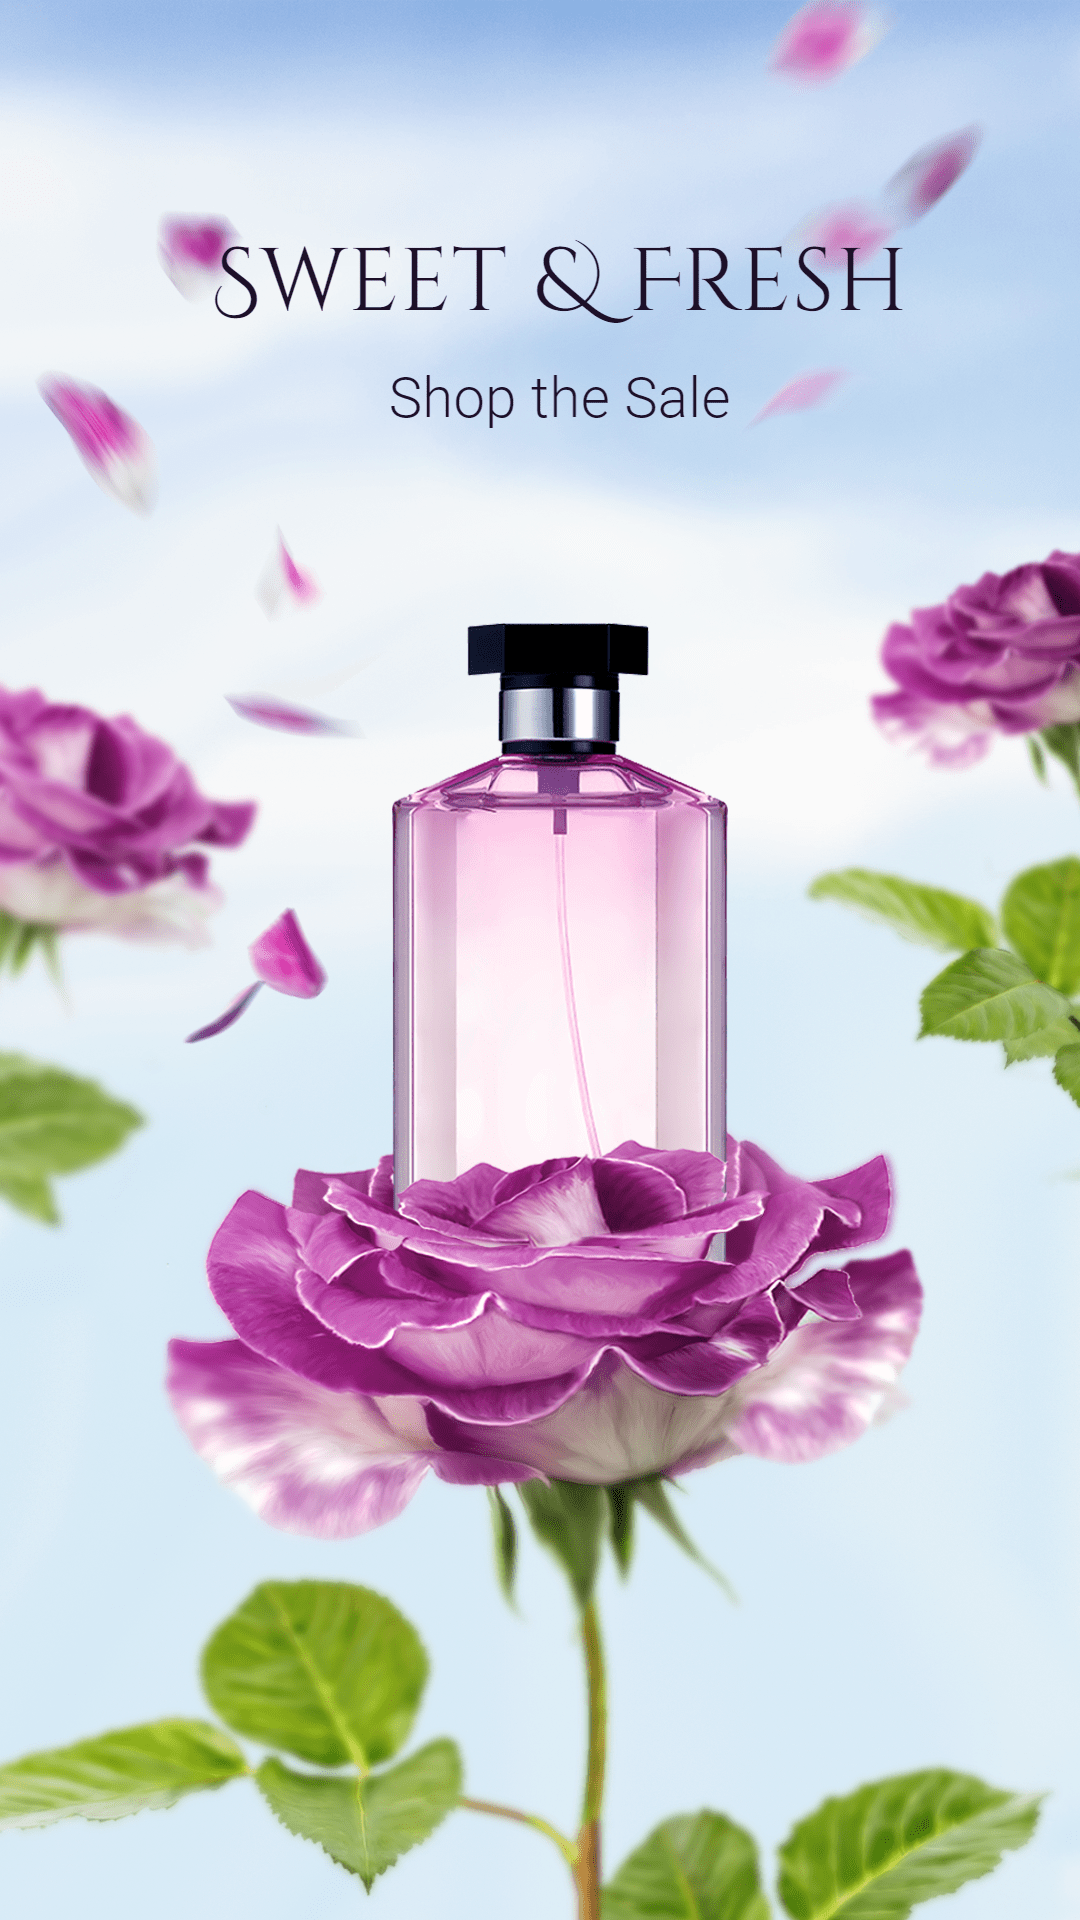 Purple Flower Background Women’s Perfume Fragrance Sale Promotion Ecommerce Story